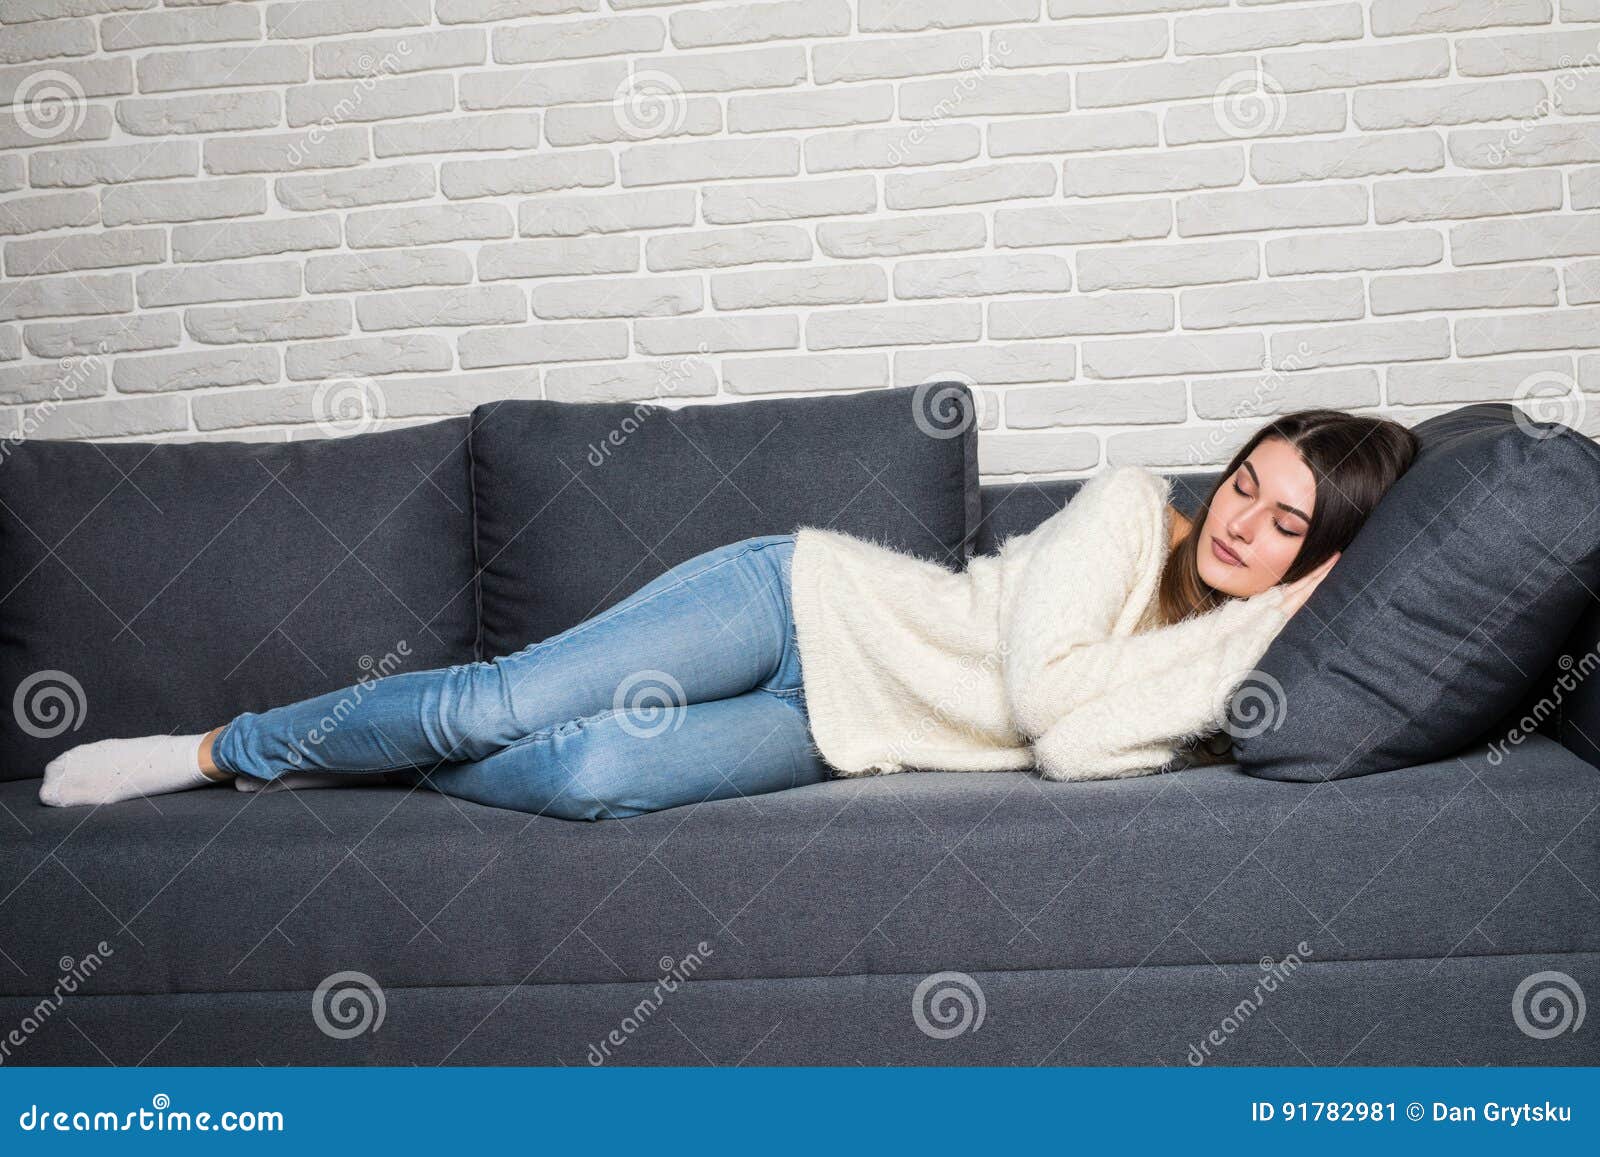 Спящие девушки на диване. Белая девочка на диване.